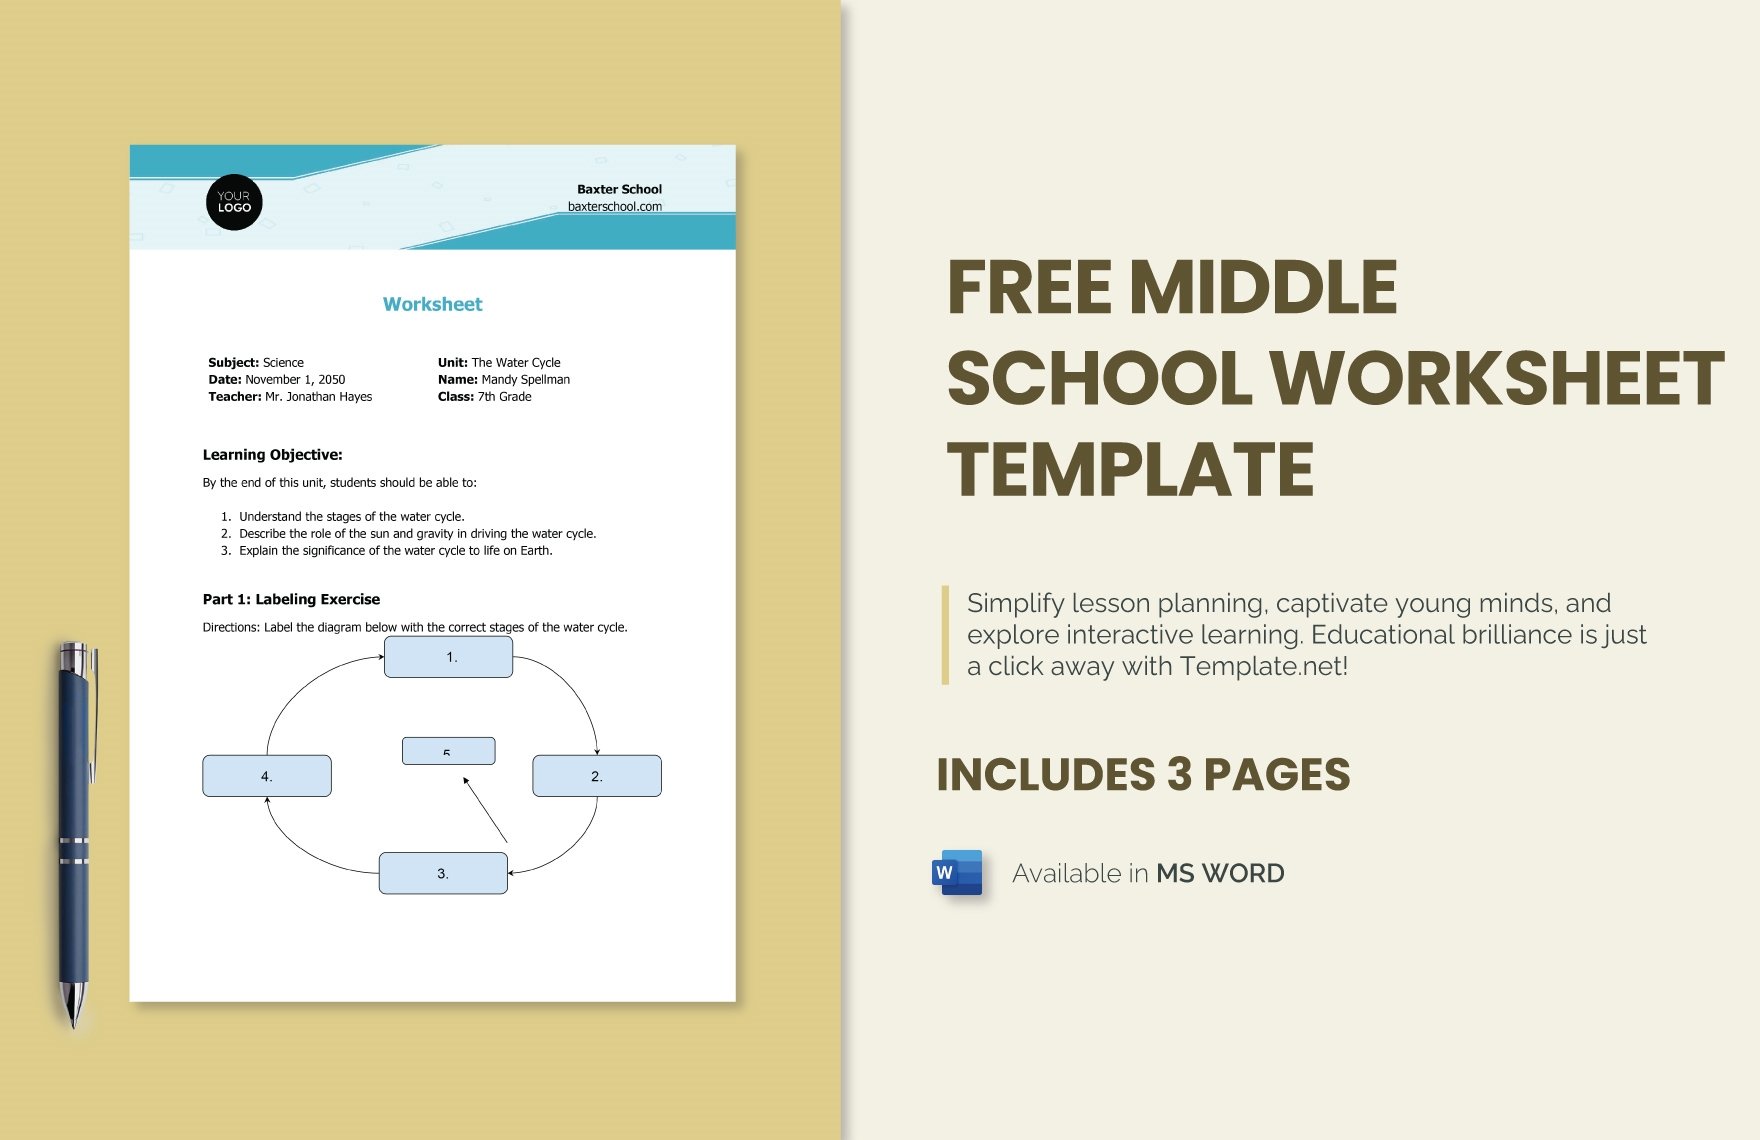 Free Middle School Worksheet Template